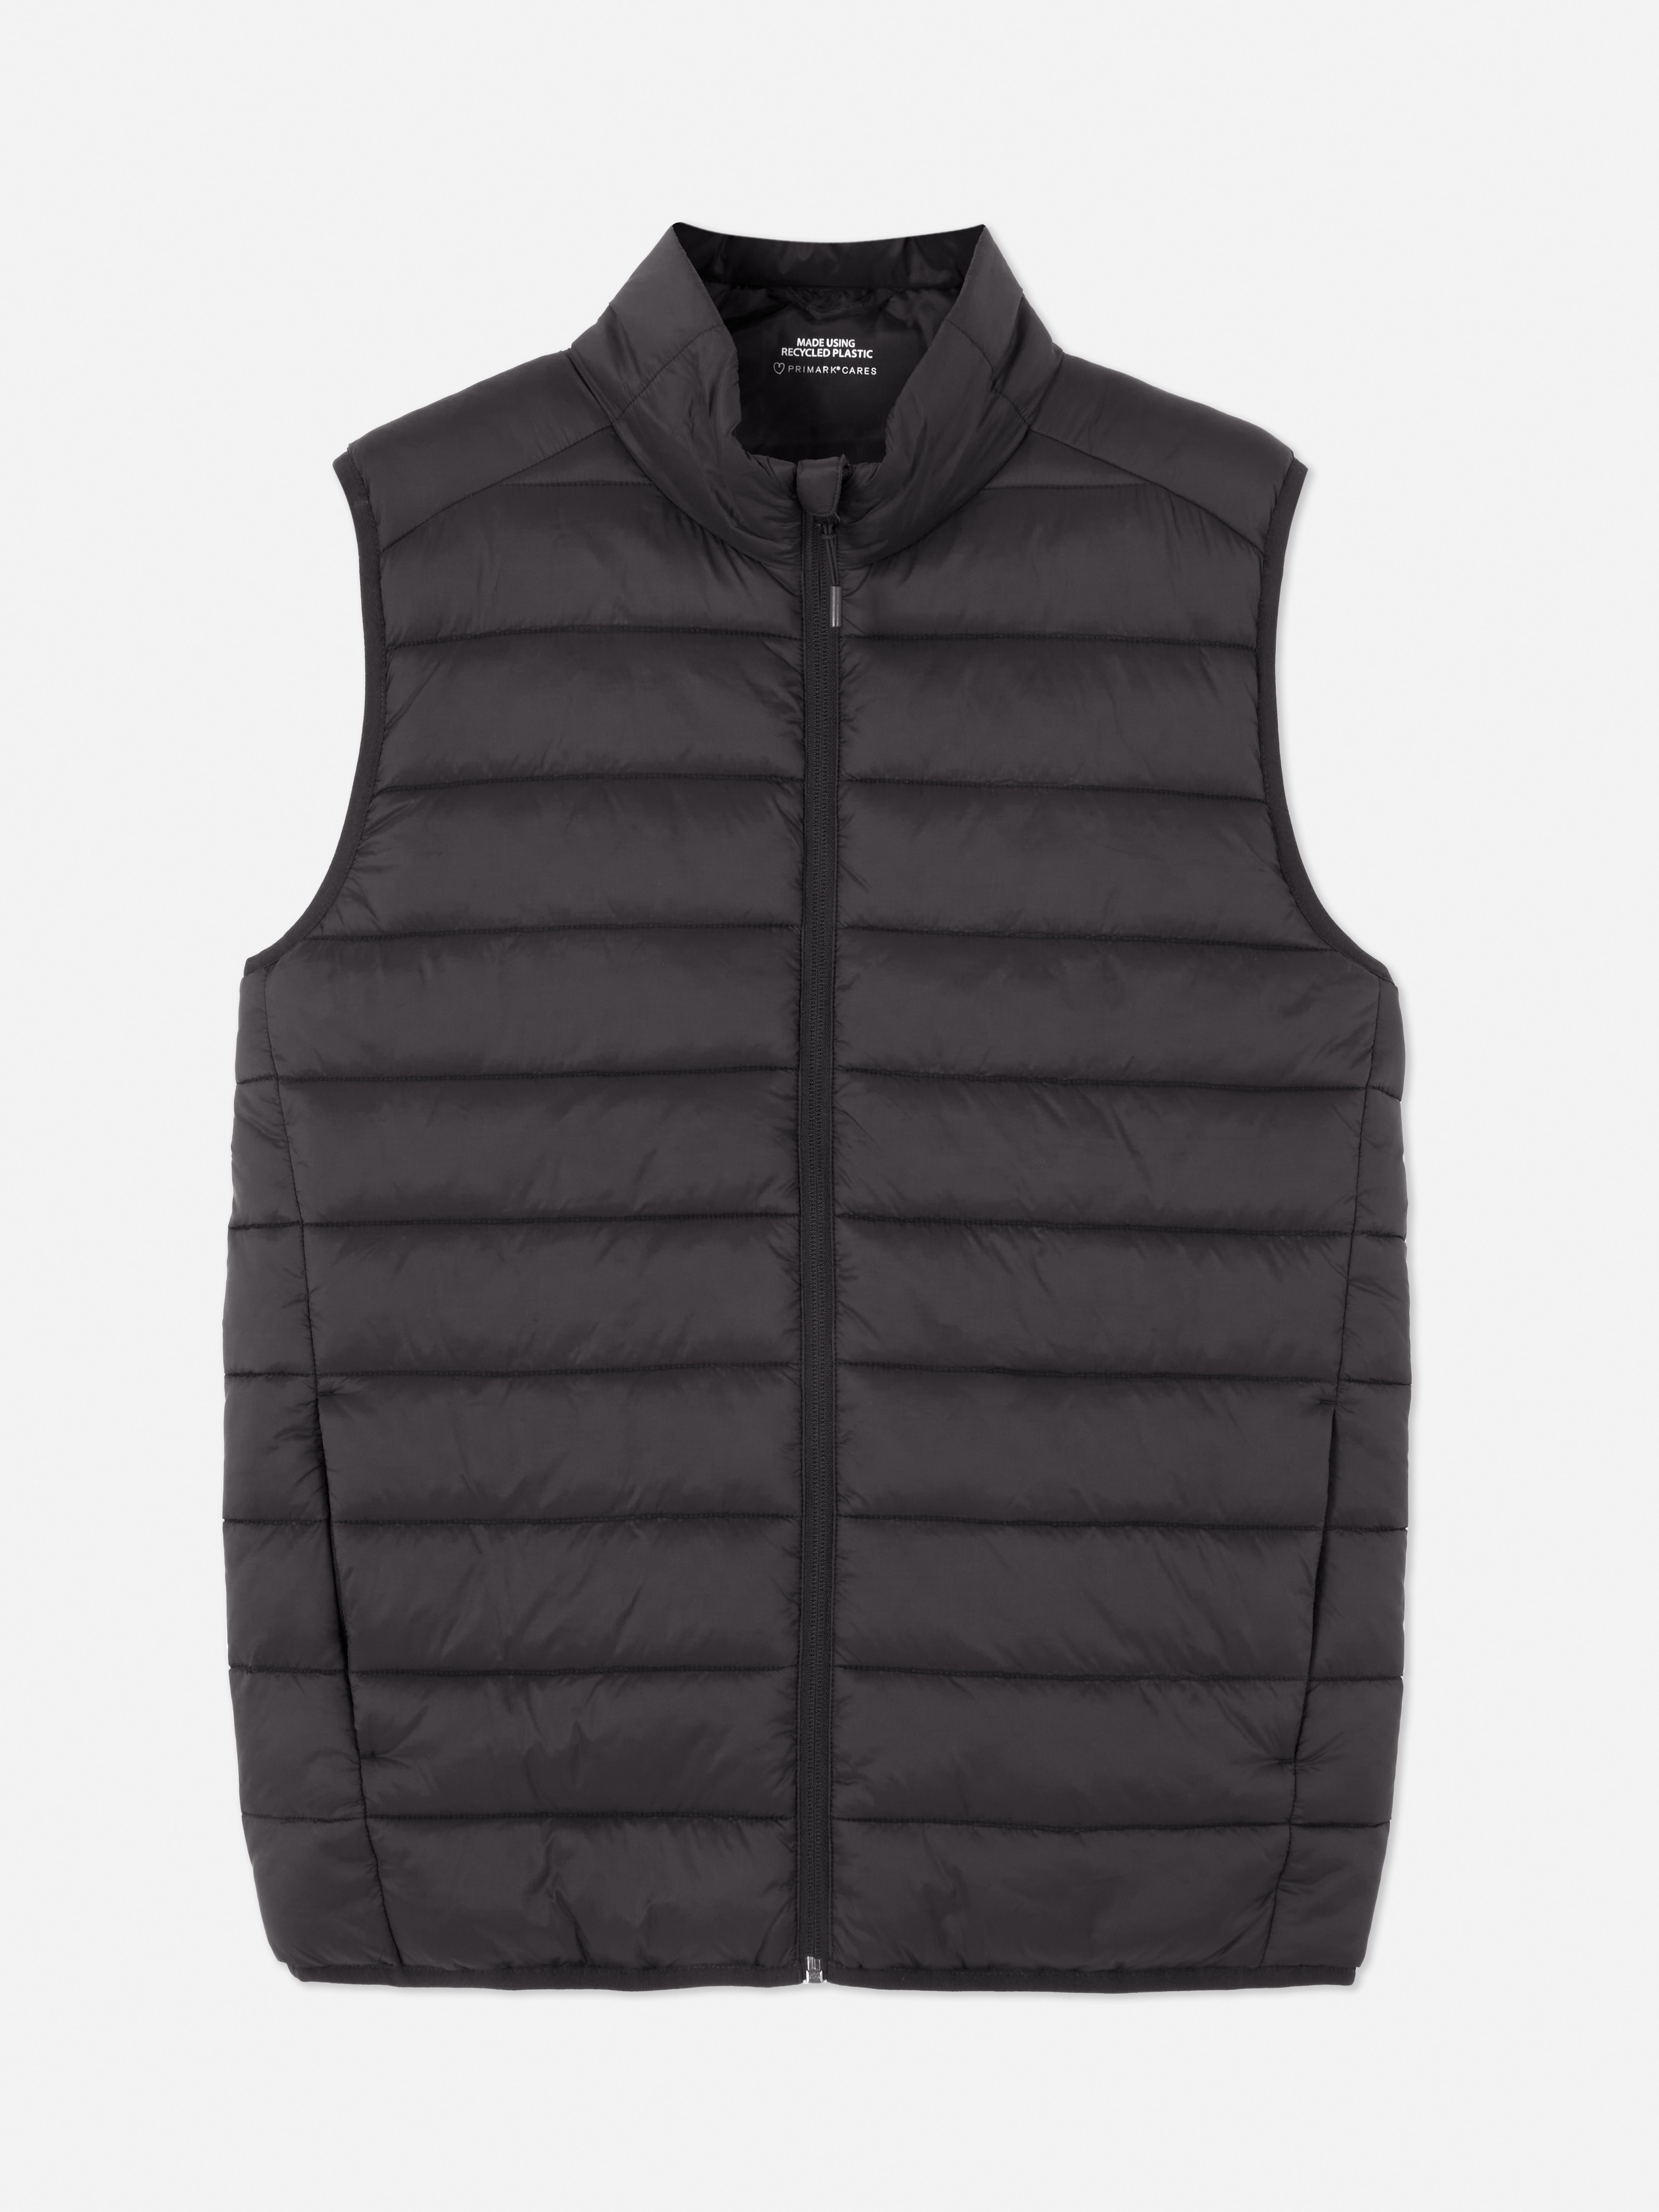 Quilted Zip Vest | Men's Coats & Jackets | Men's Style | Our Menswear ...